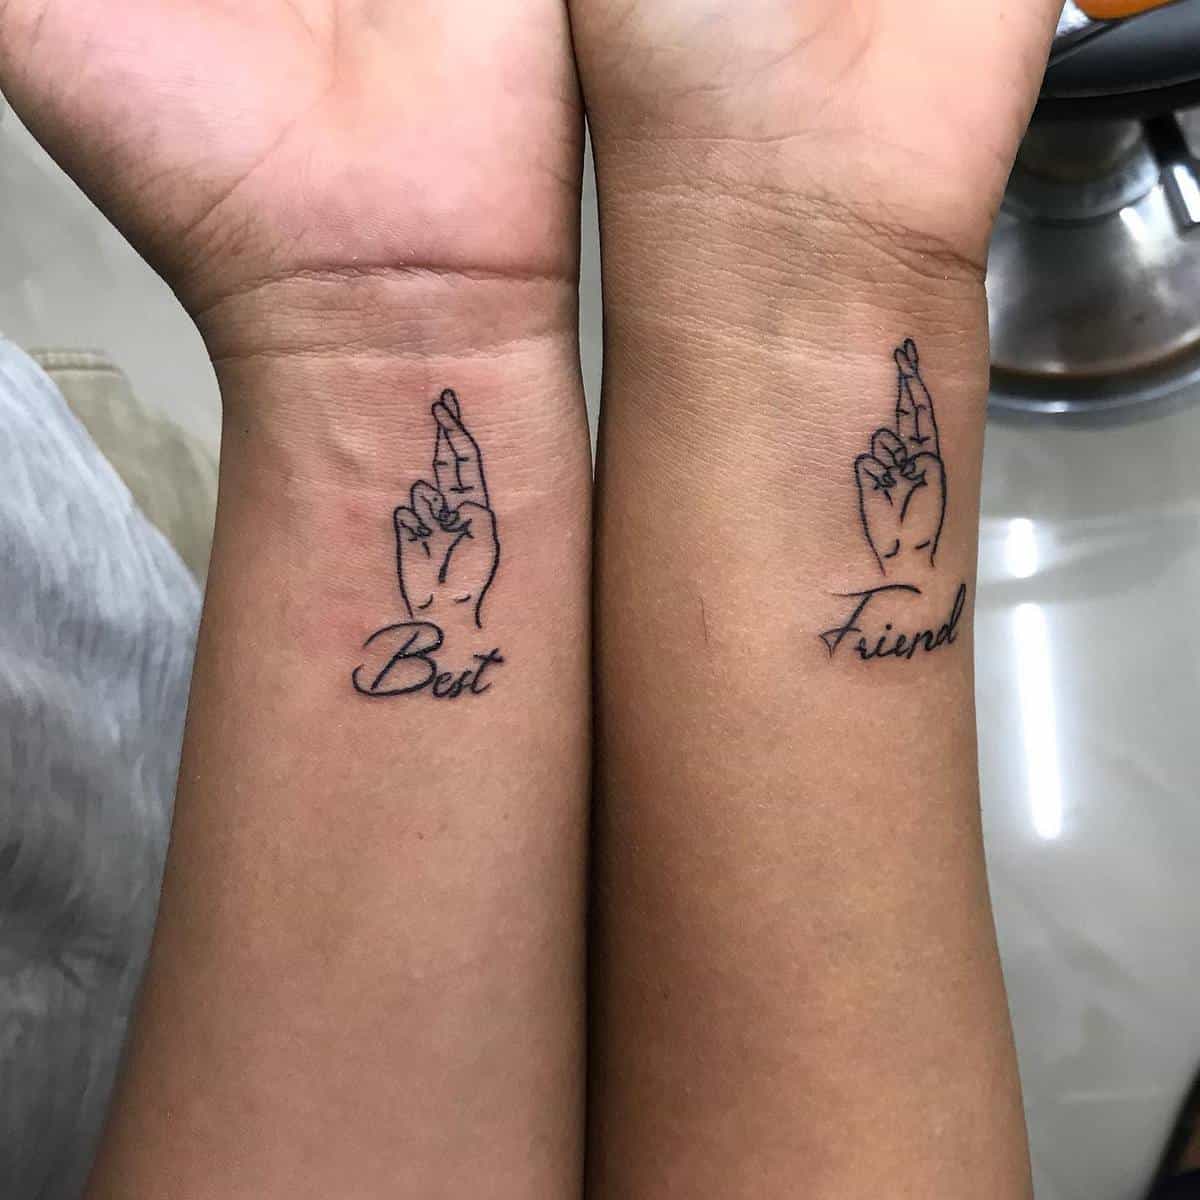 Bestfriend Matching Tattoos romelvistattoo